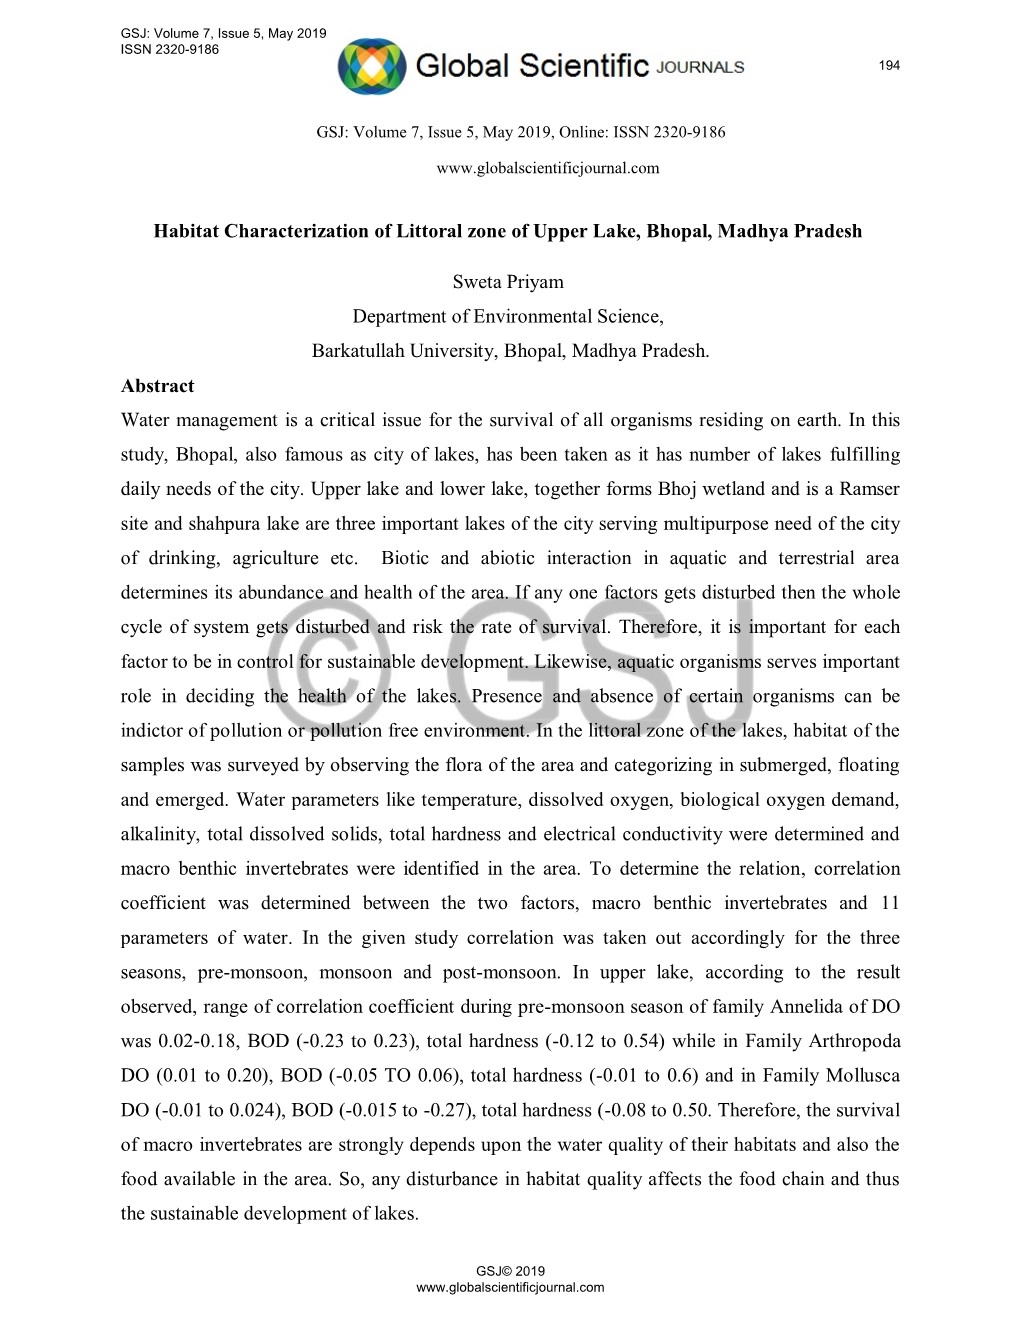 Habitat Characterization of Littoral Zone of Upper Lake, Bhopal, Madhya Pradesh